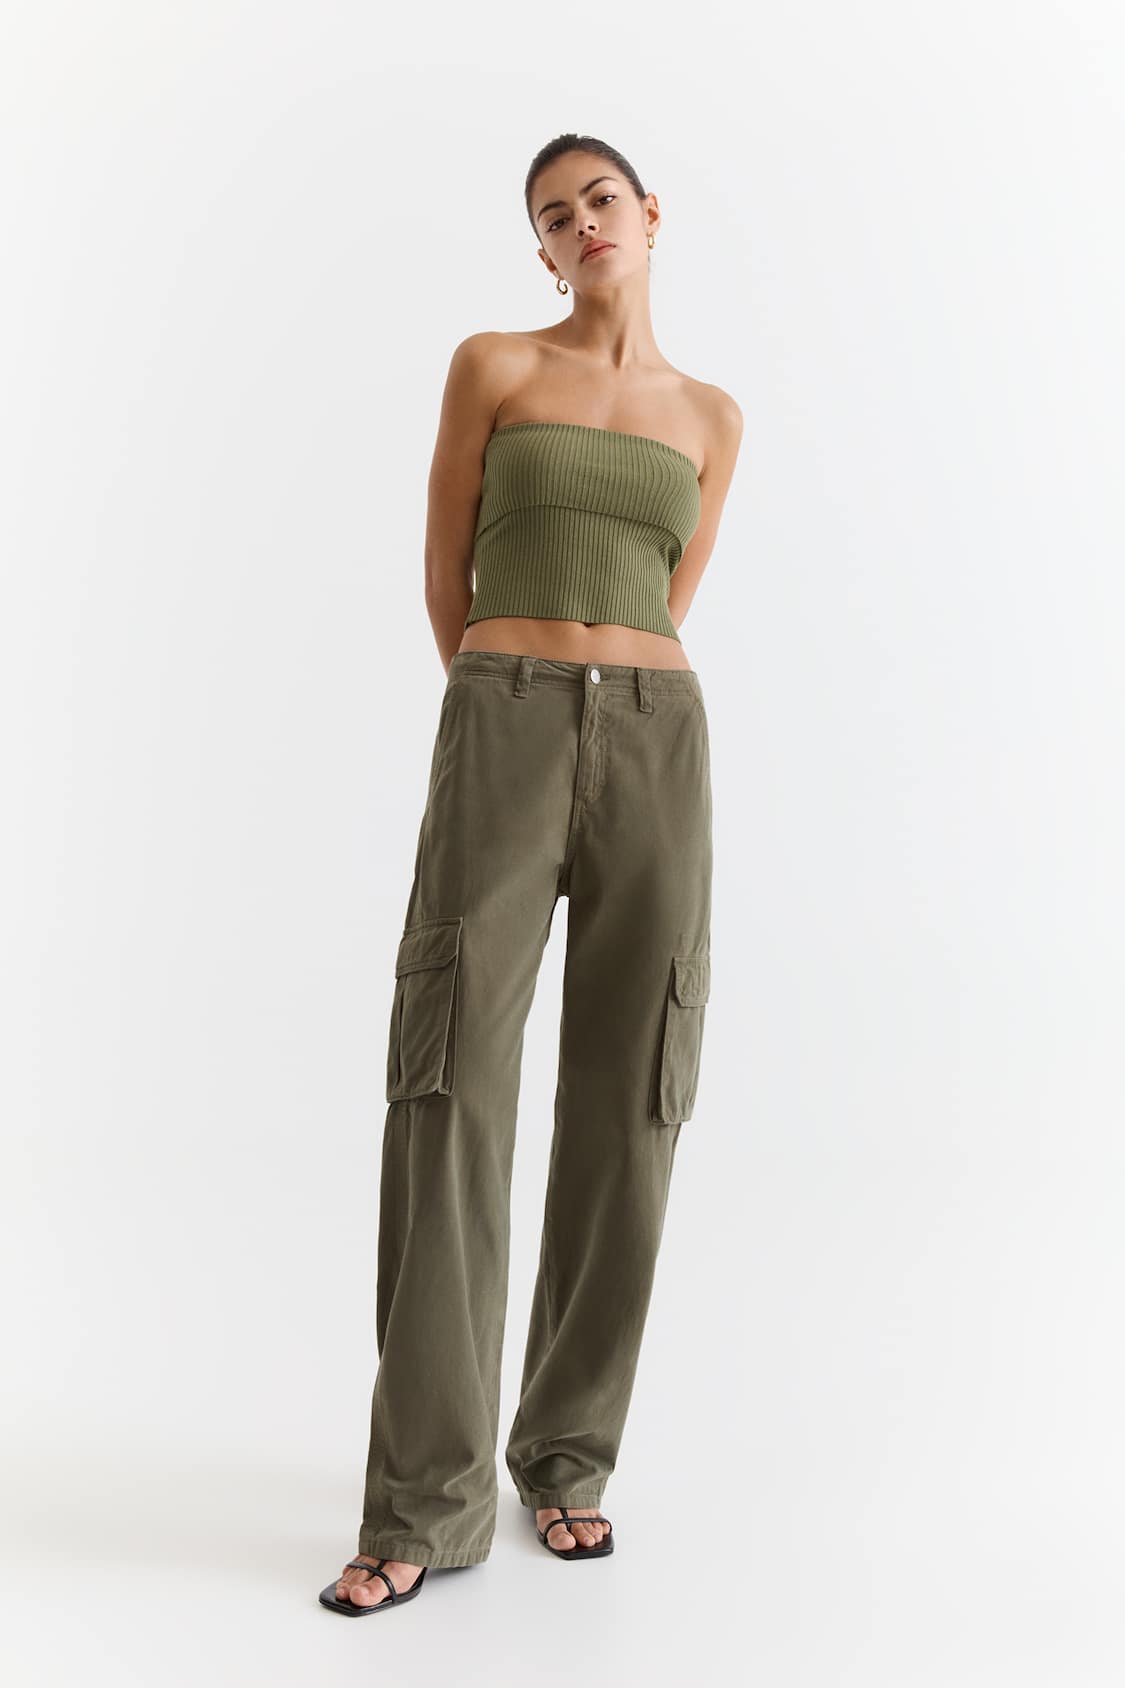 pantalon cargo verde militar - Daruma indumentaria